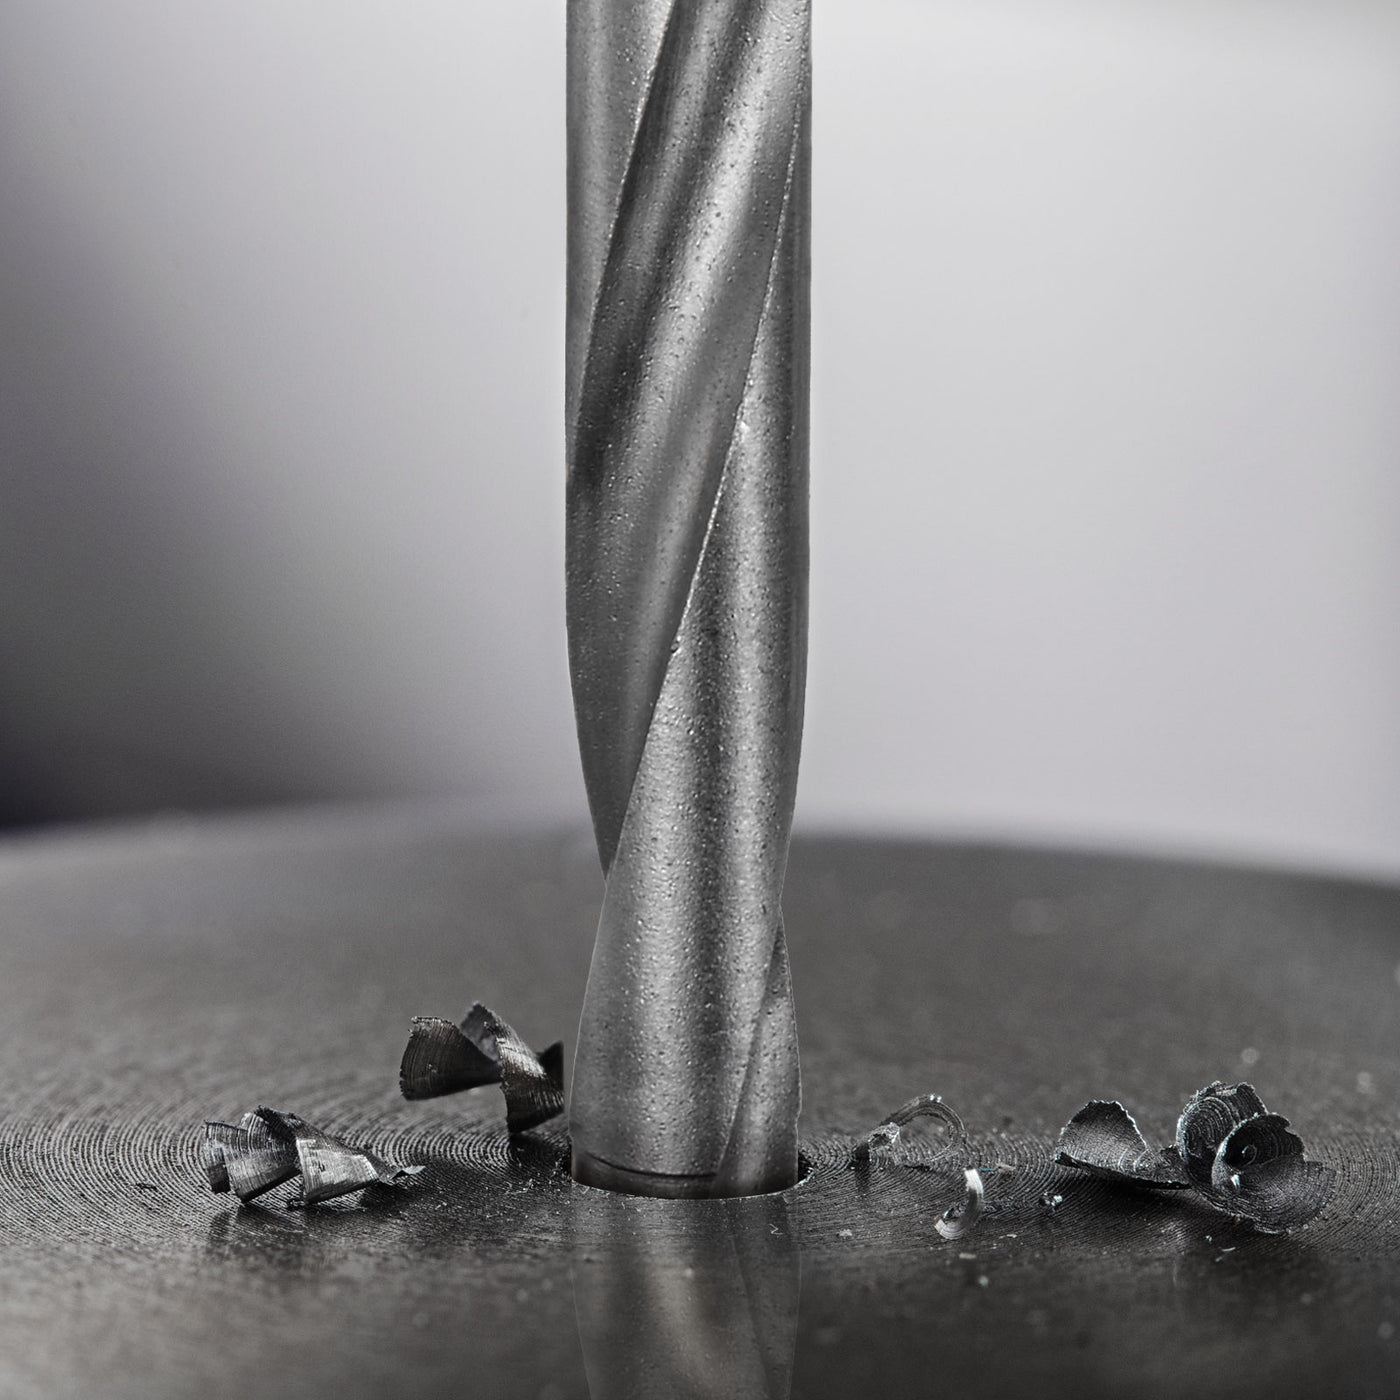 Harfington Cutting Dia Cemented Carbide Twist Drill Bit, with Round Straight Shank